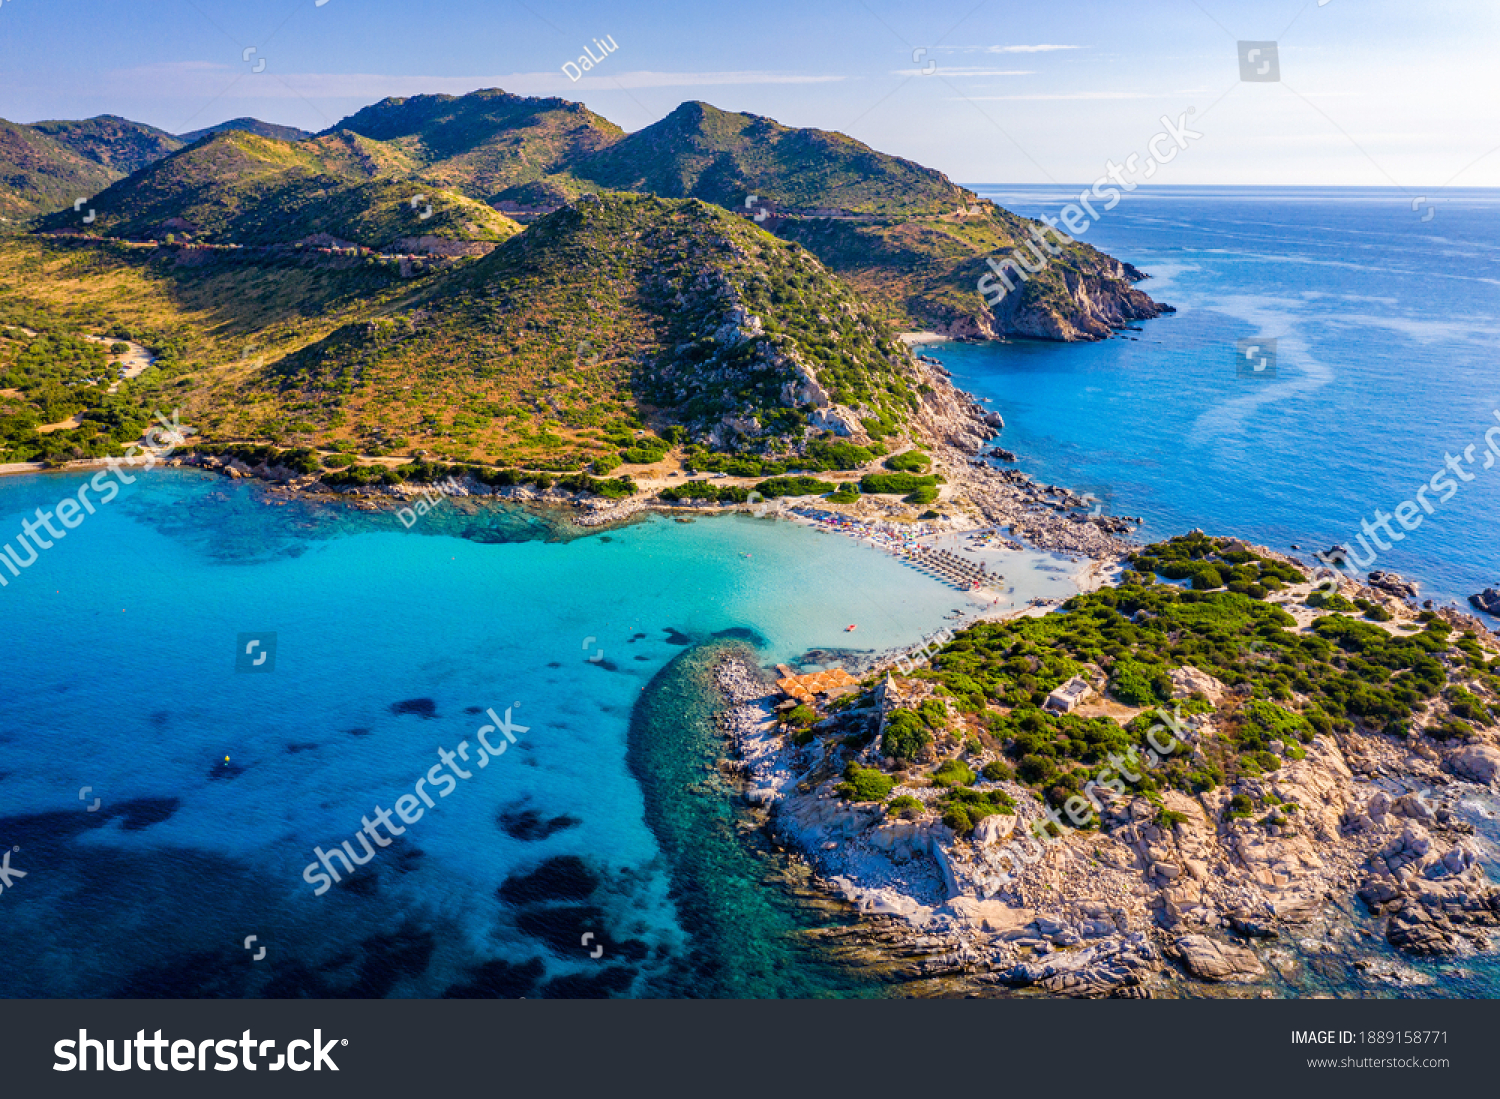 Cost of Sardinia: Peninsula of Punta Molentis. View of beautiful beach at Punta Molentis, Villasimius, Sardinia, Italy. Beautiful bay with sandy beach at Punta Molentis, Sardinia island, Italy. #1889158771